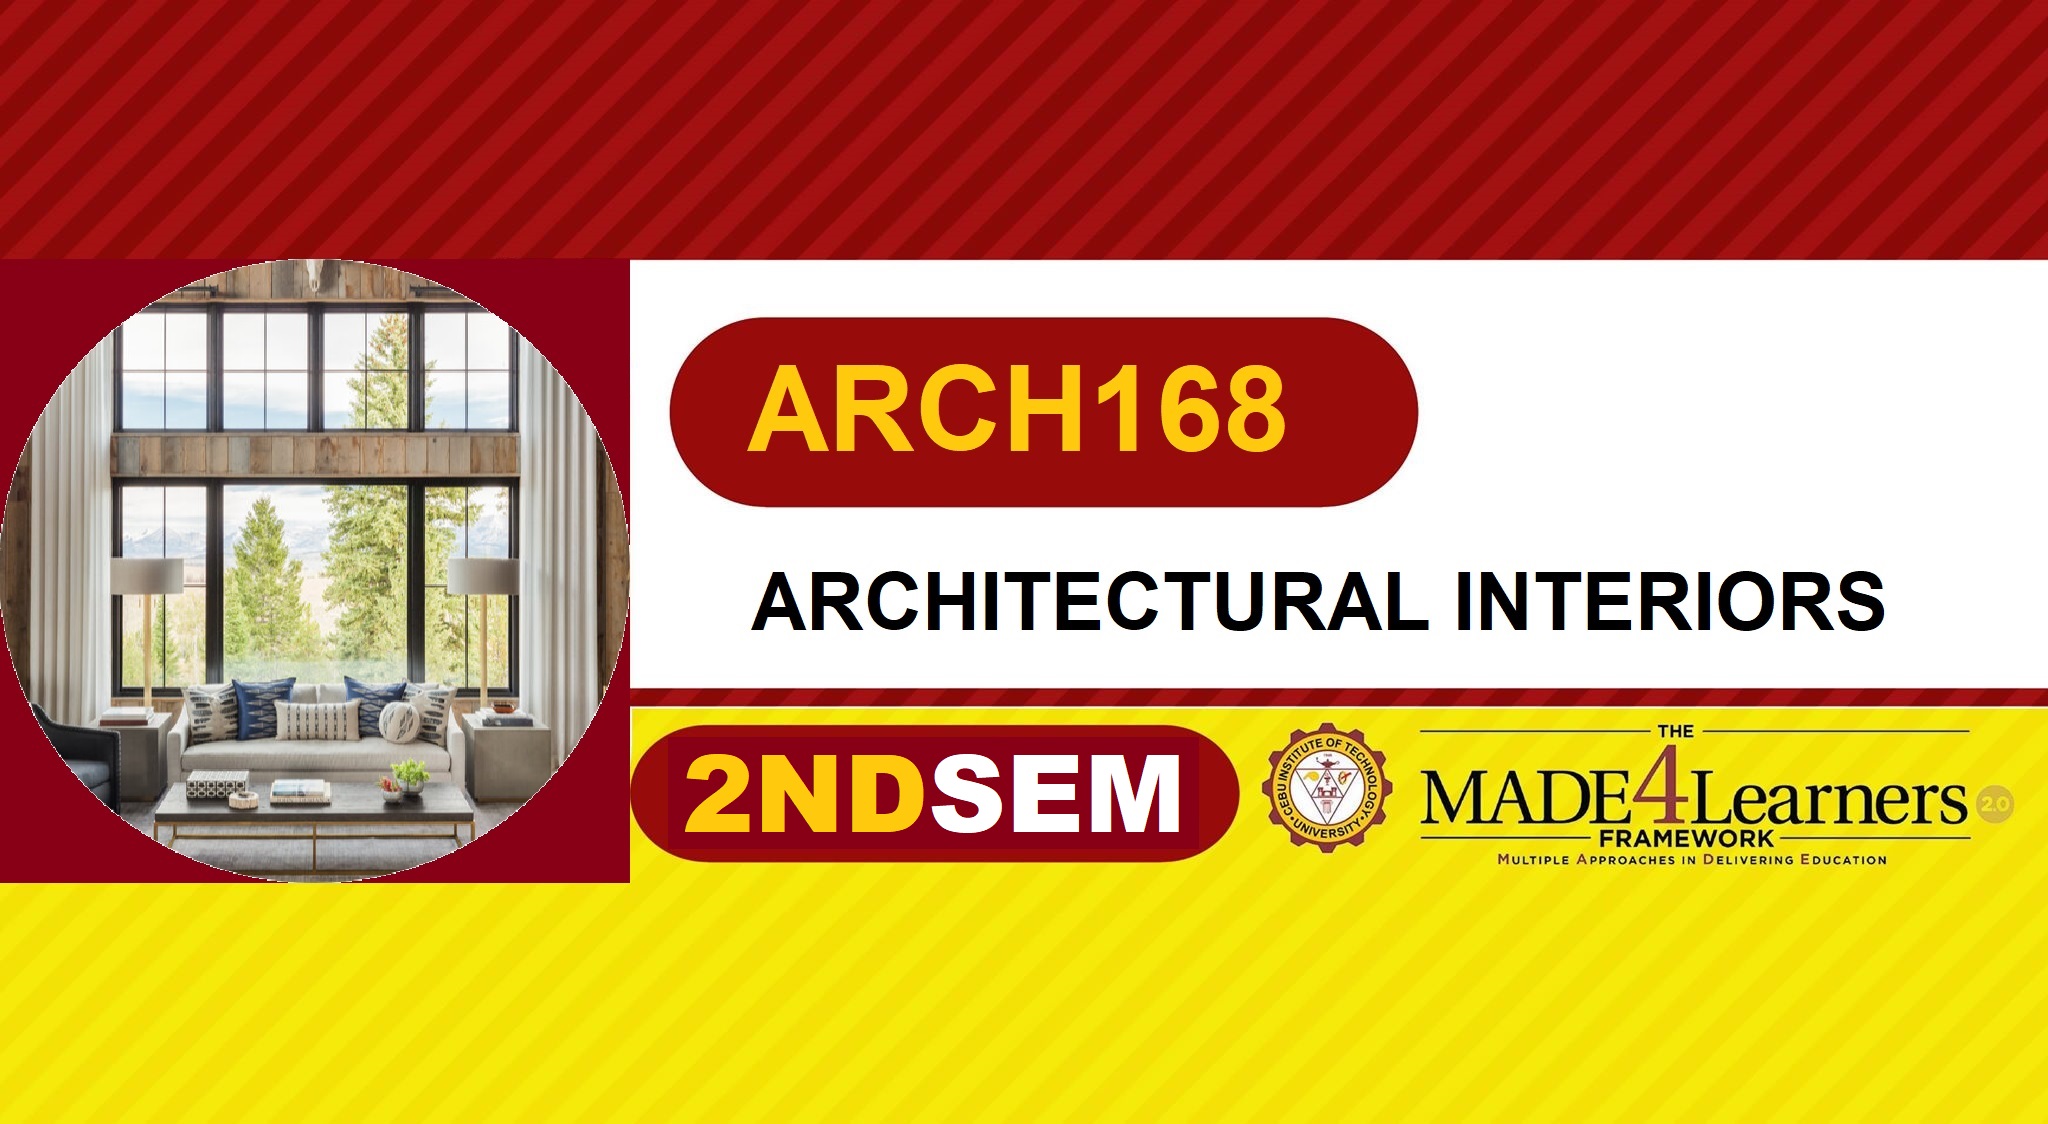 ARCH168: ARCHITECTURAL INTERIORS